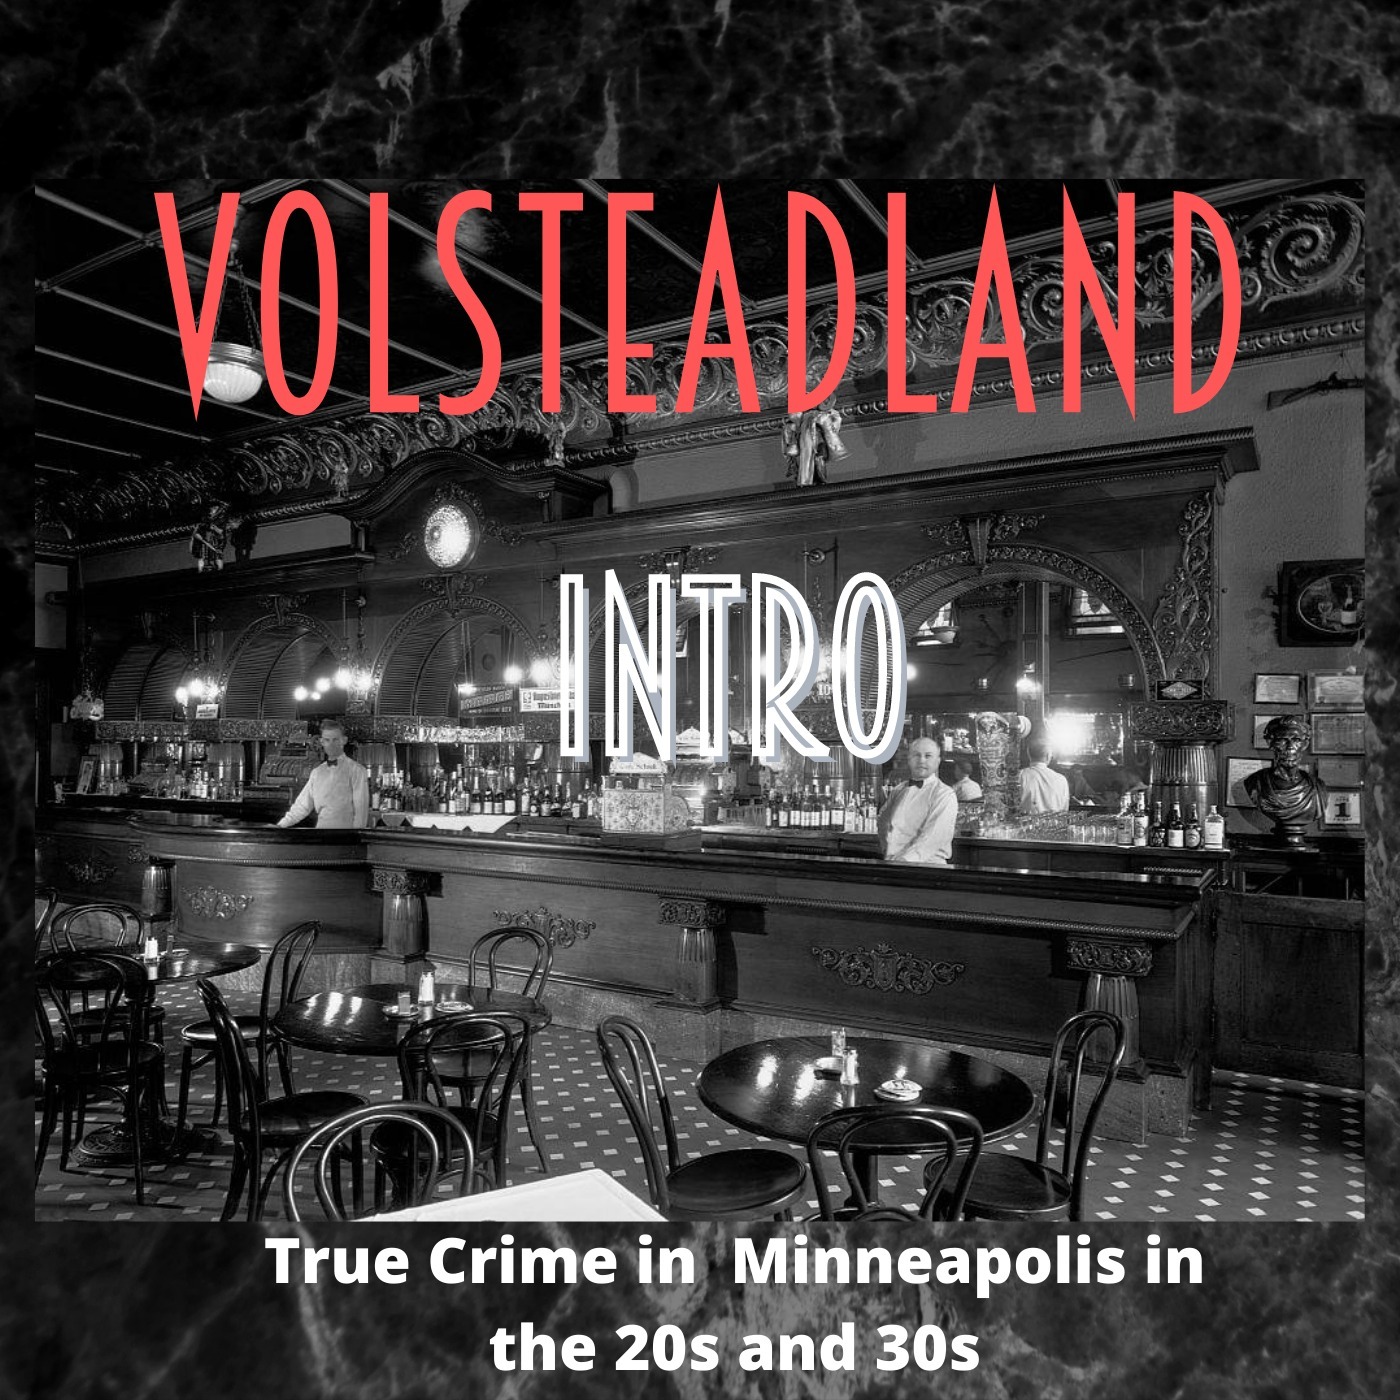 Volsteadland: Introduction Image